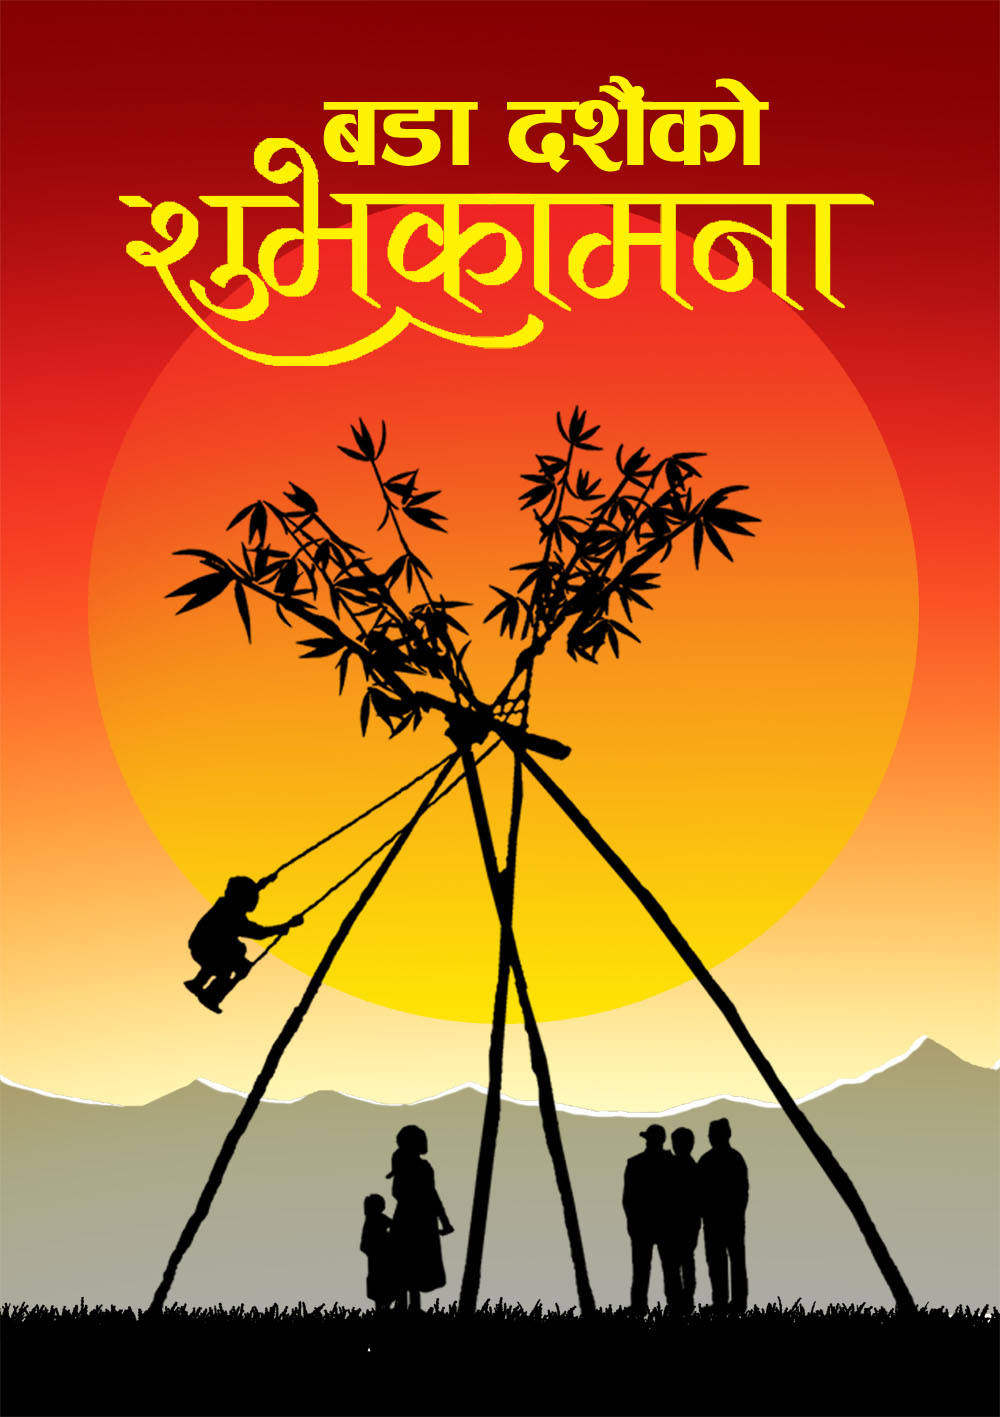 Happy Dashain greeting card